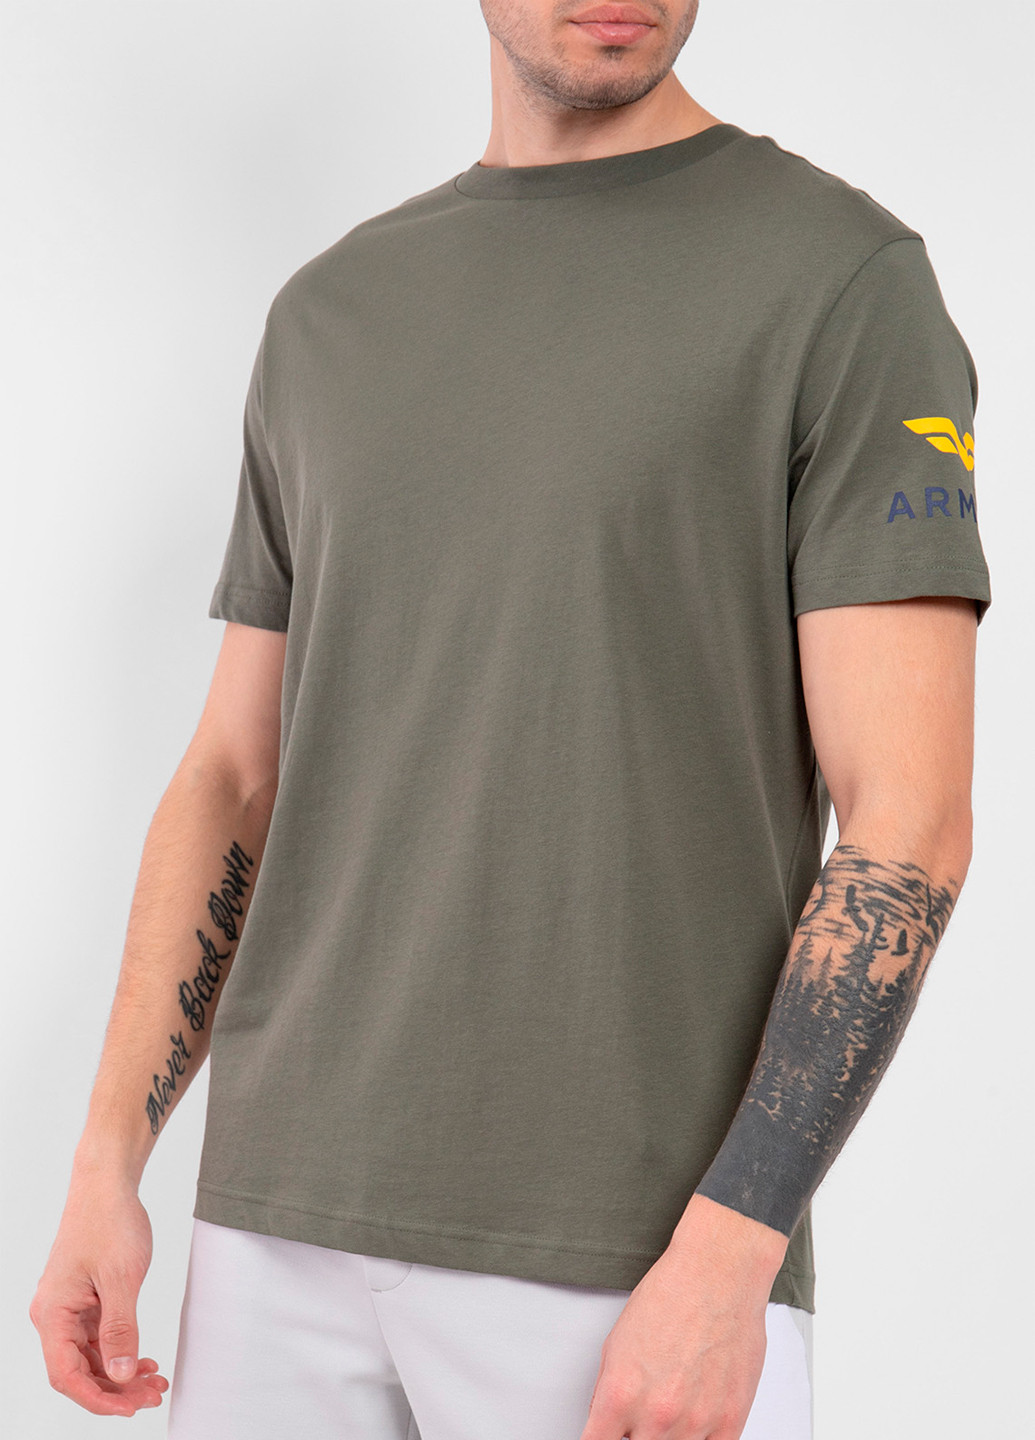 Хаки (оливковая) футболка Armata Di Mare